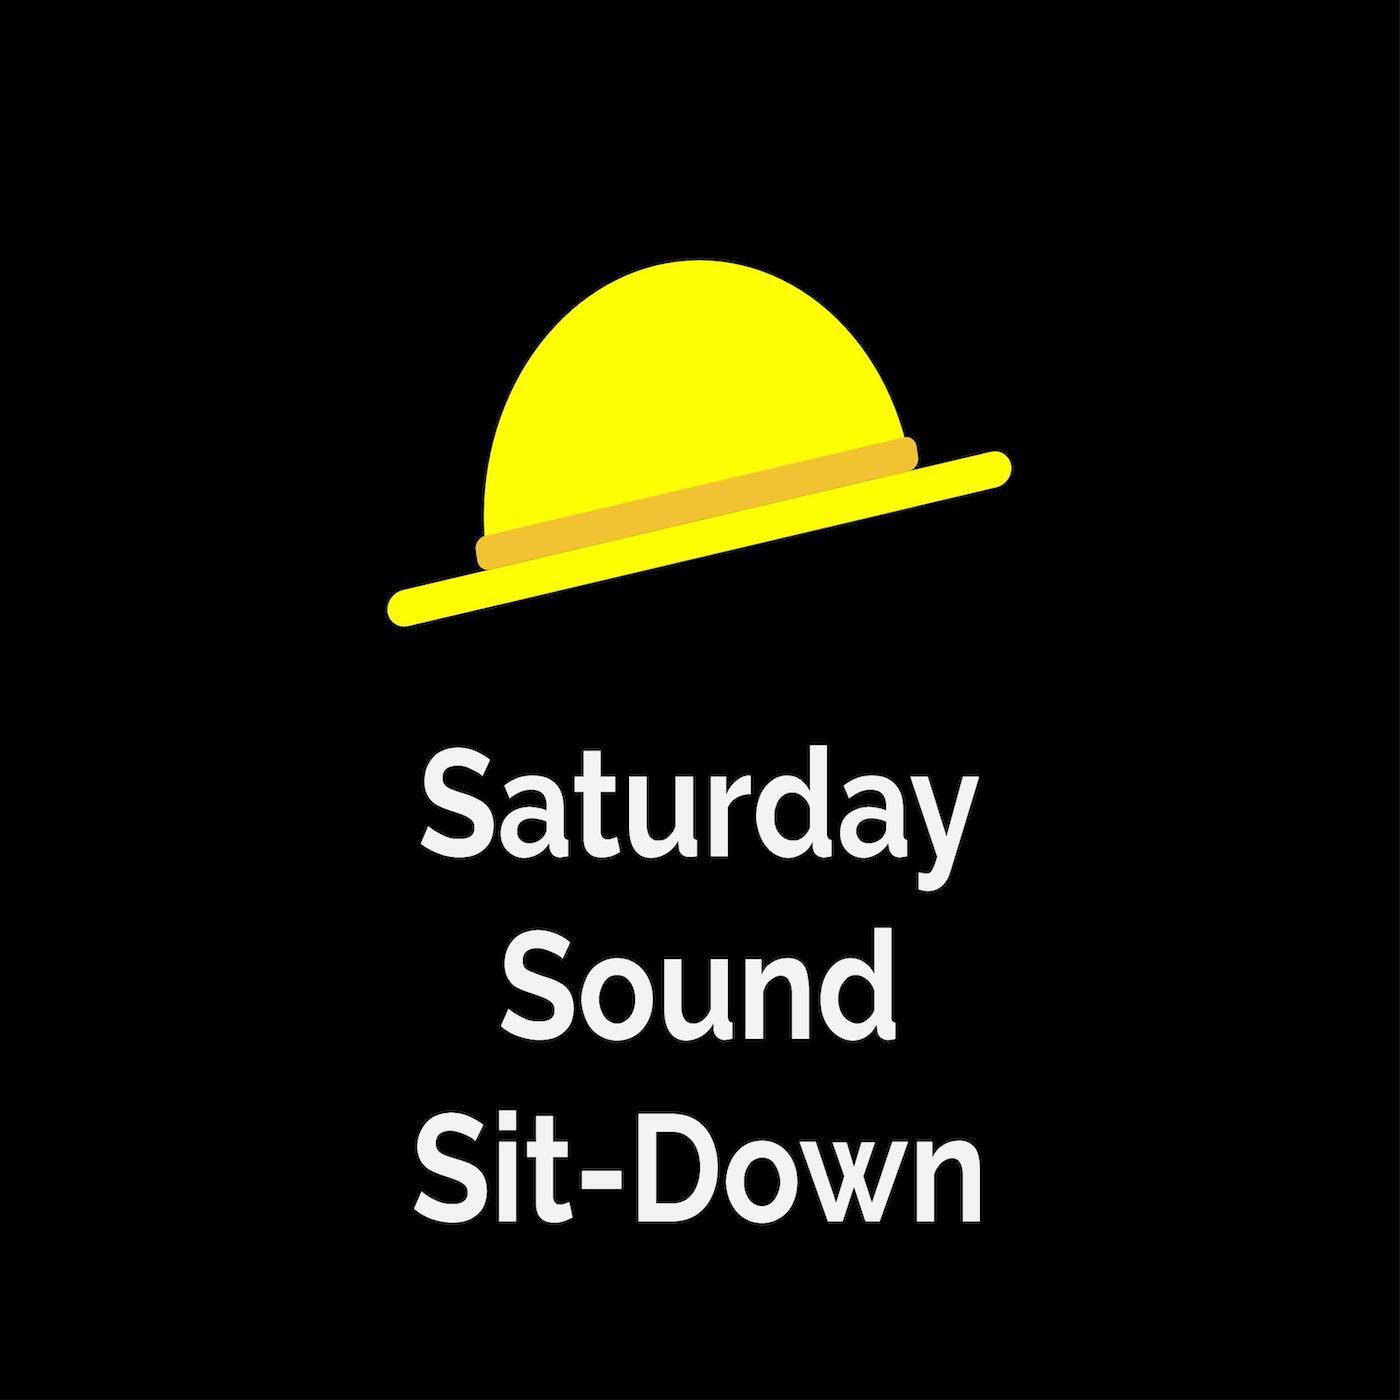 The Saturday Sound Sit-Down Logo